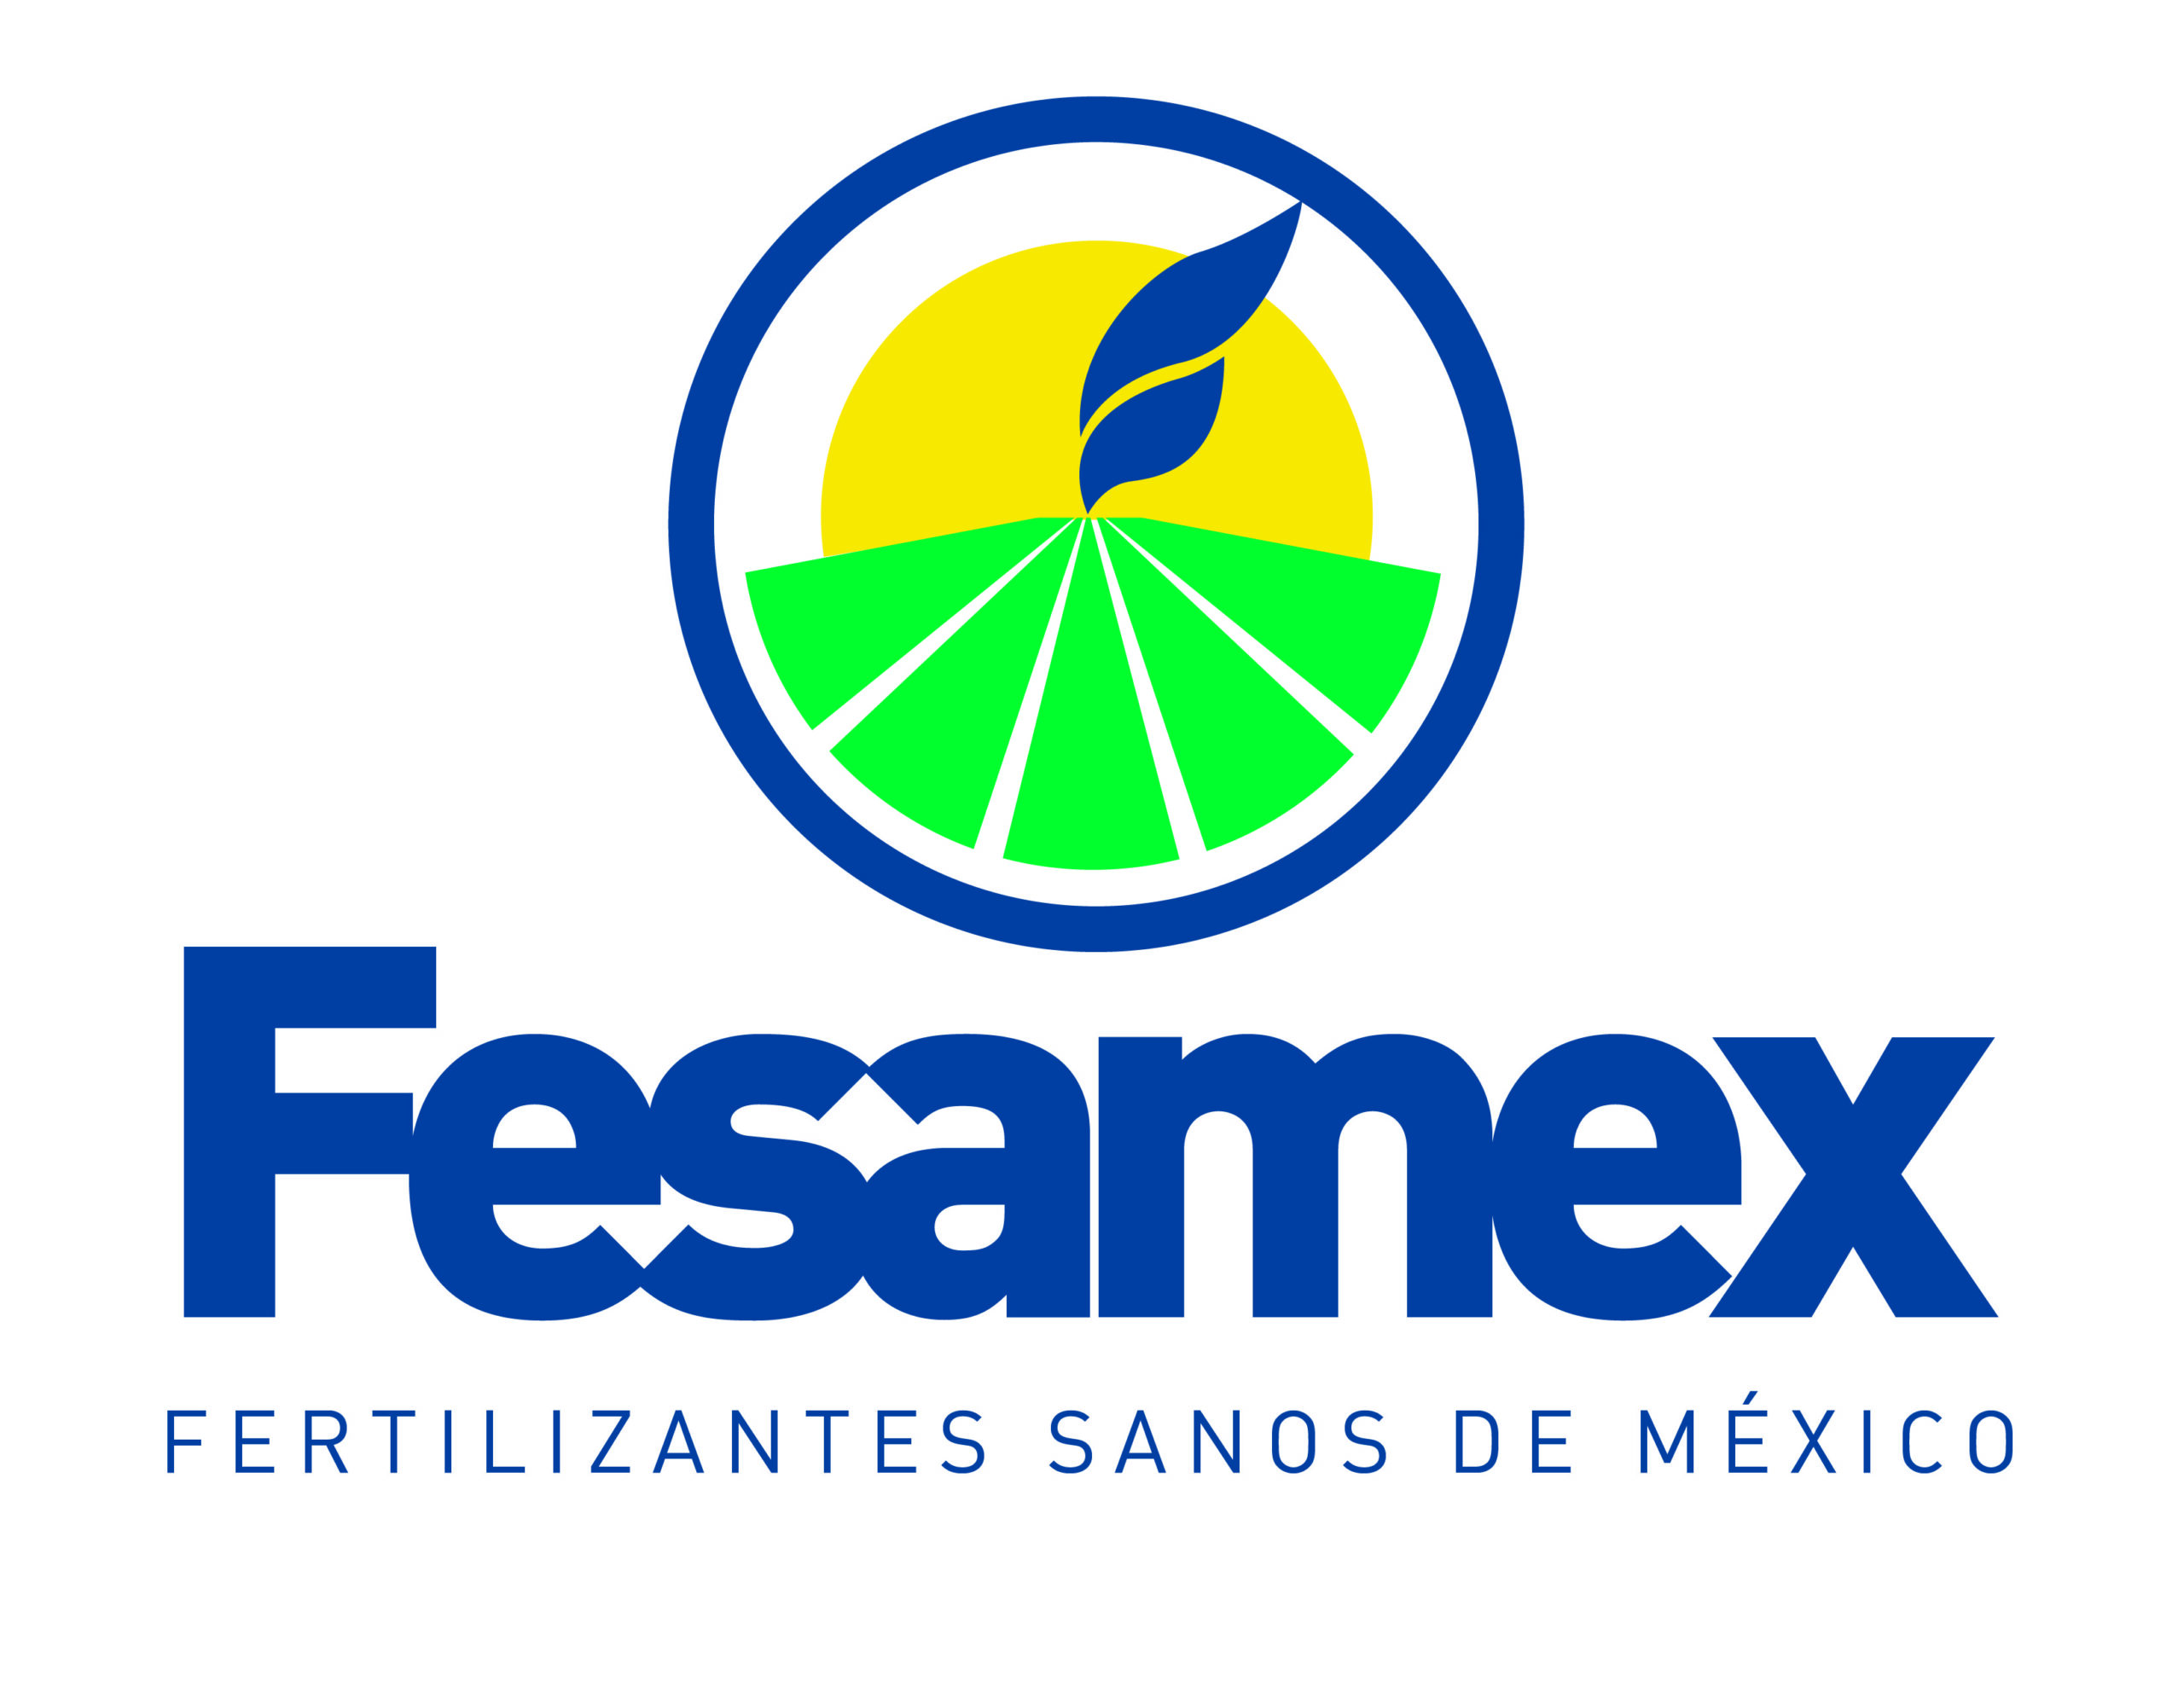 Logo Fesamex